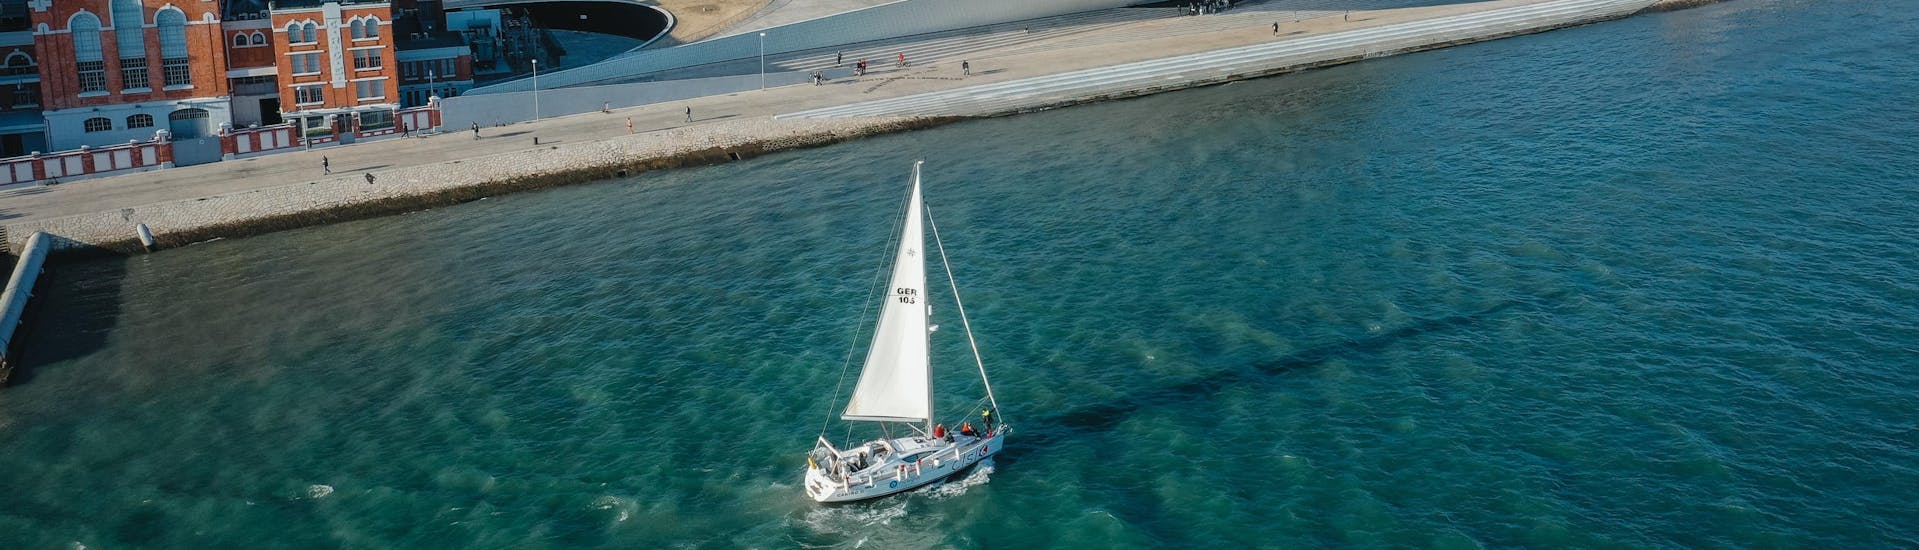 Gita in barca a vela da Doca de Alcântara a Tago con visita turistica.